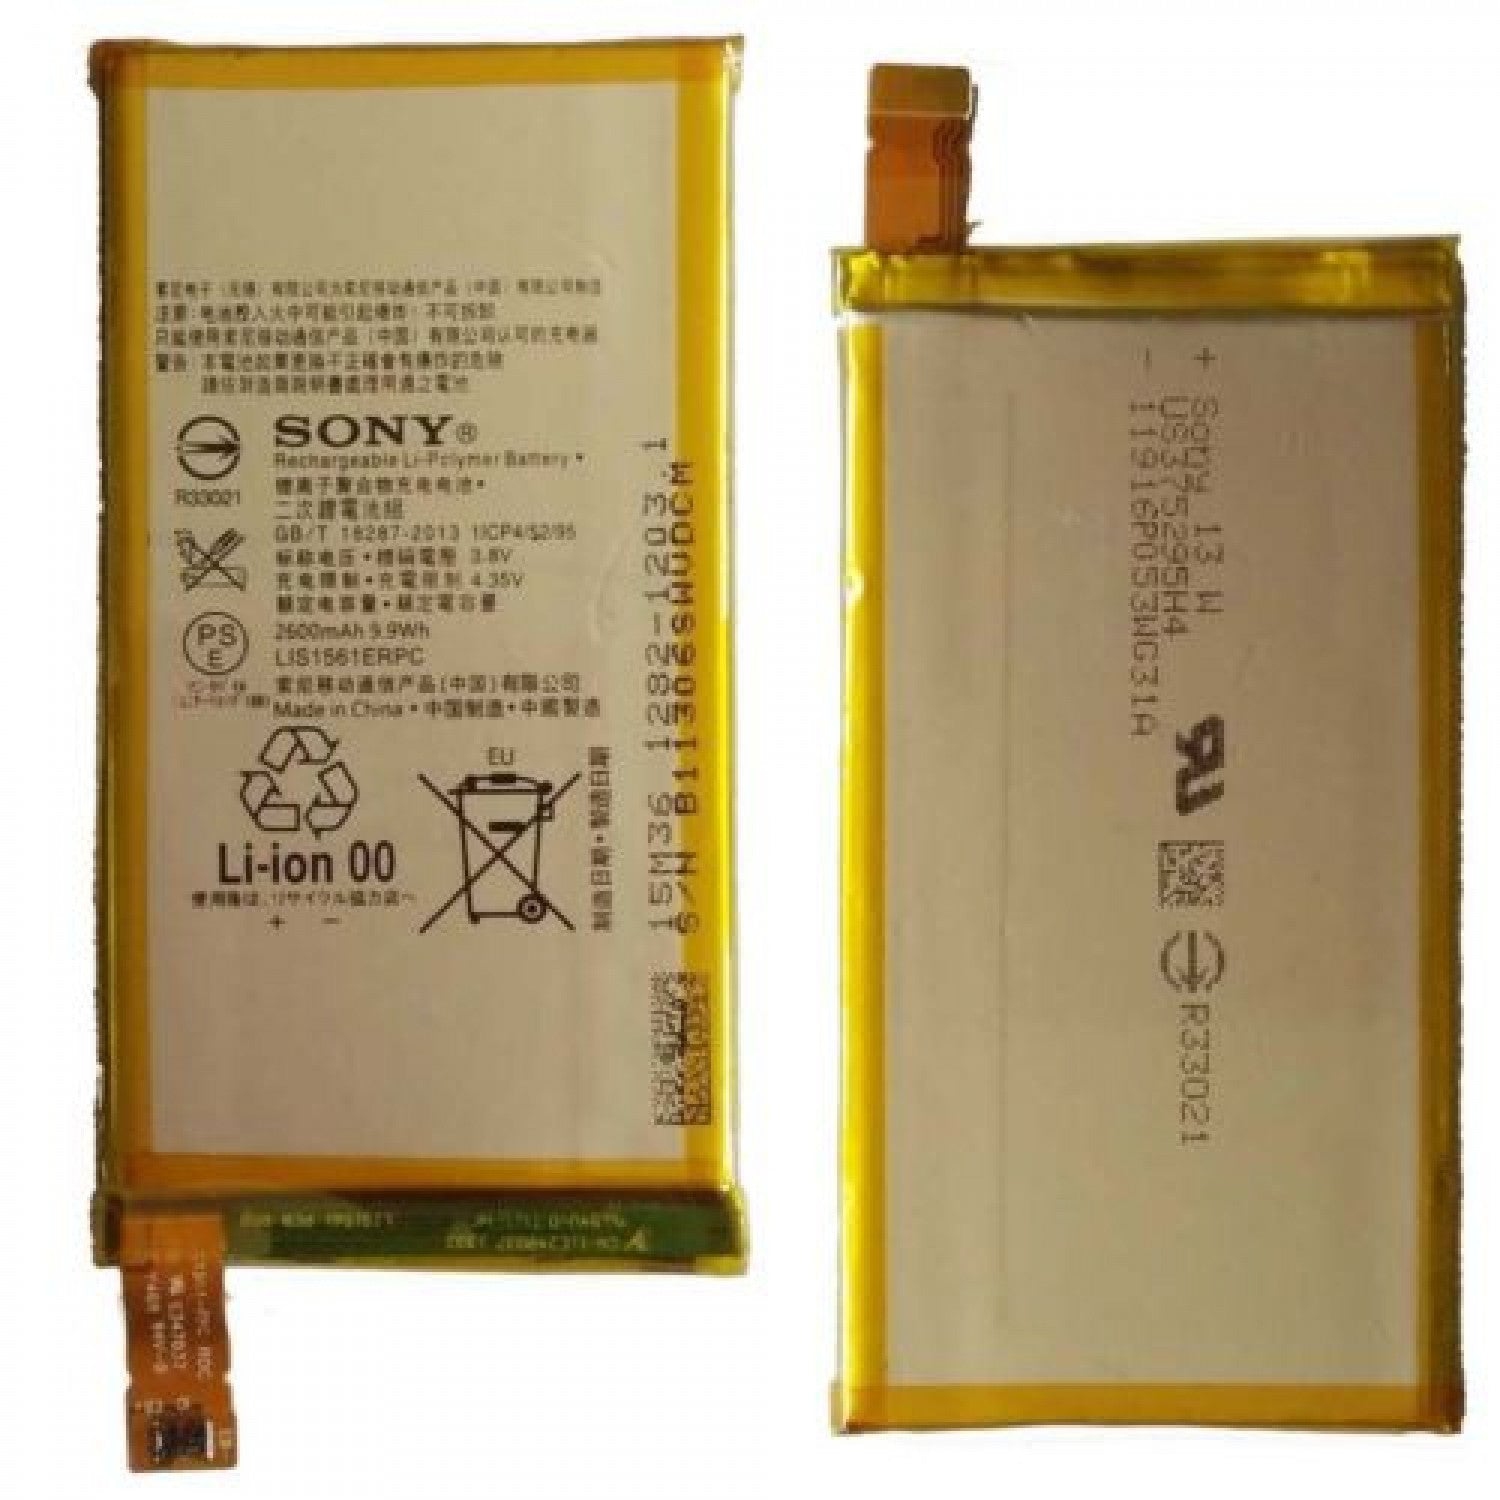 Replacement Battery LIS1561ERPC For Xperia Z3 mini compact D5803 C4 E5303 [Pro-Mobile]